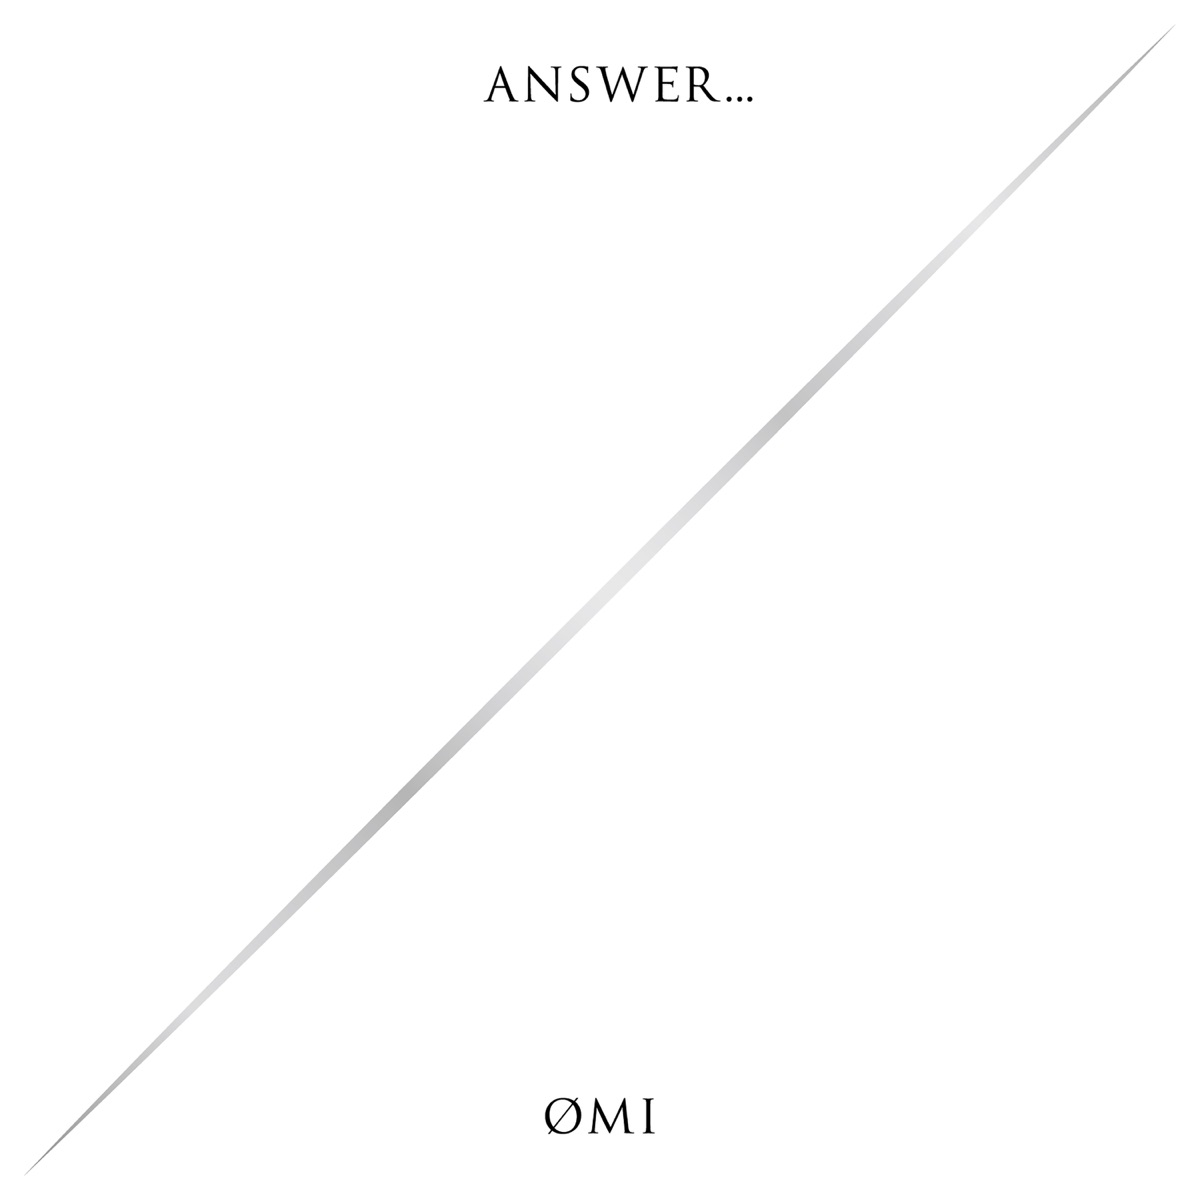 『ØMI - Love Letter』収録の『ANSWER...』ジャケット